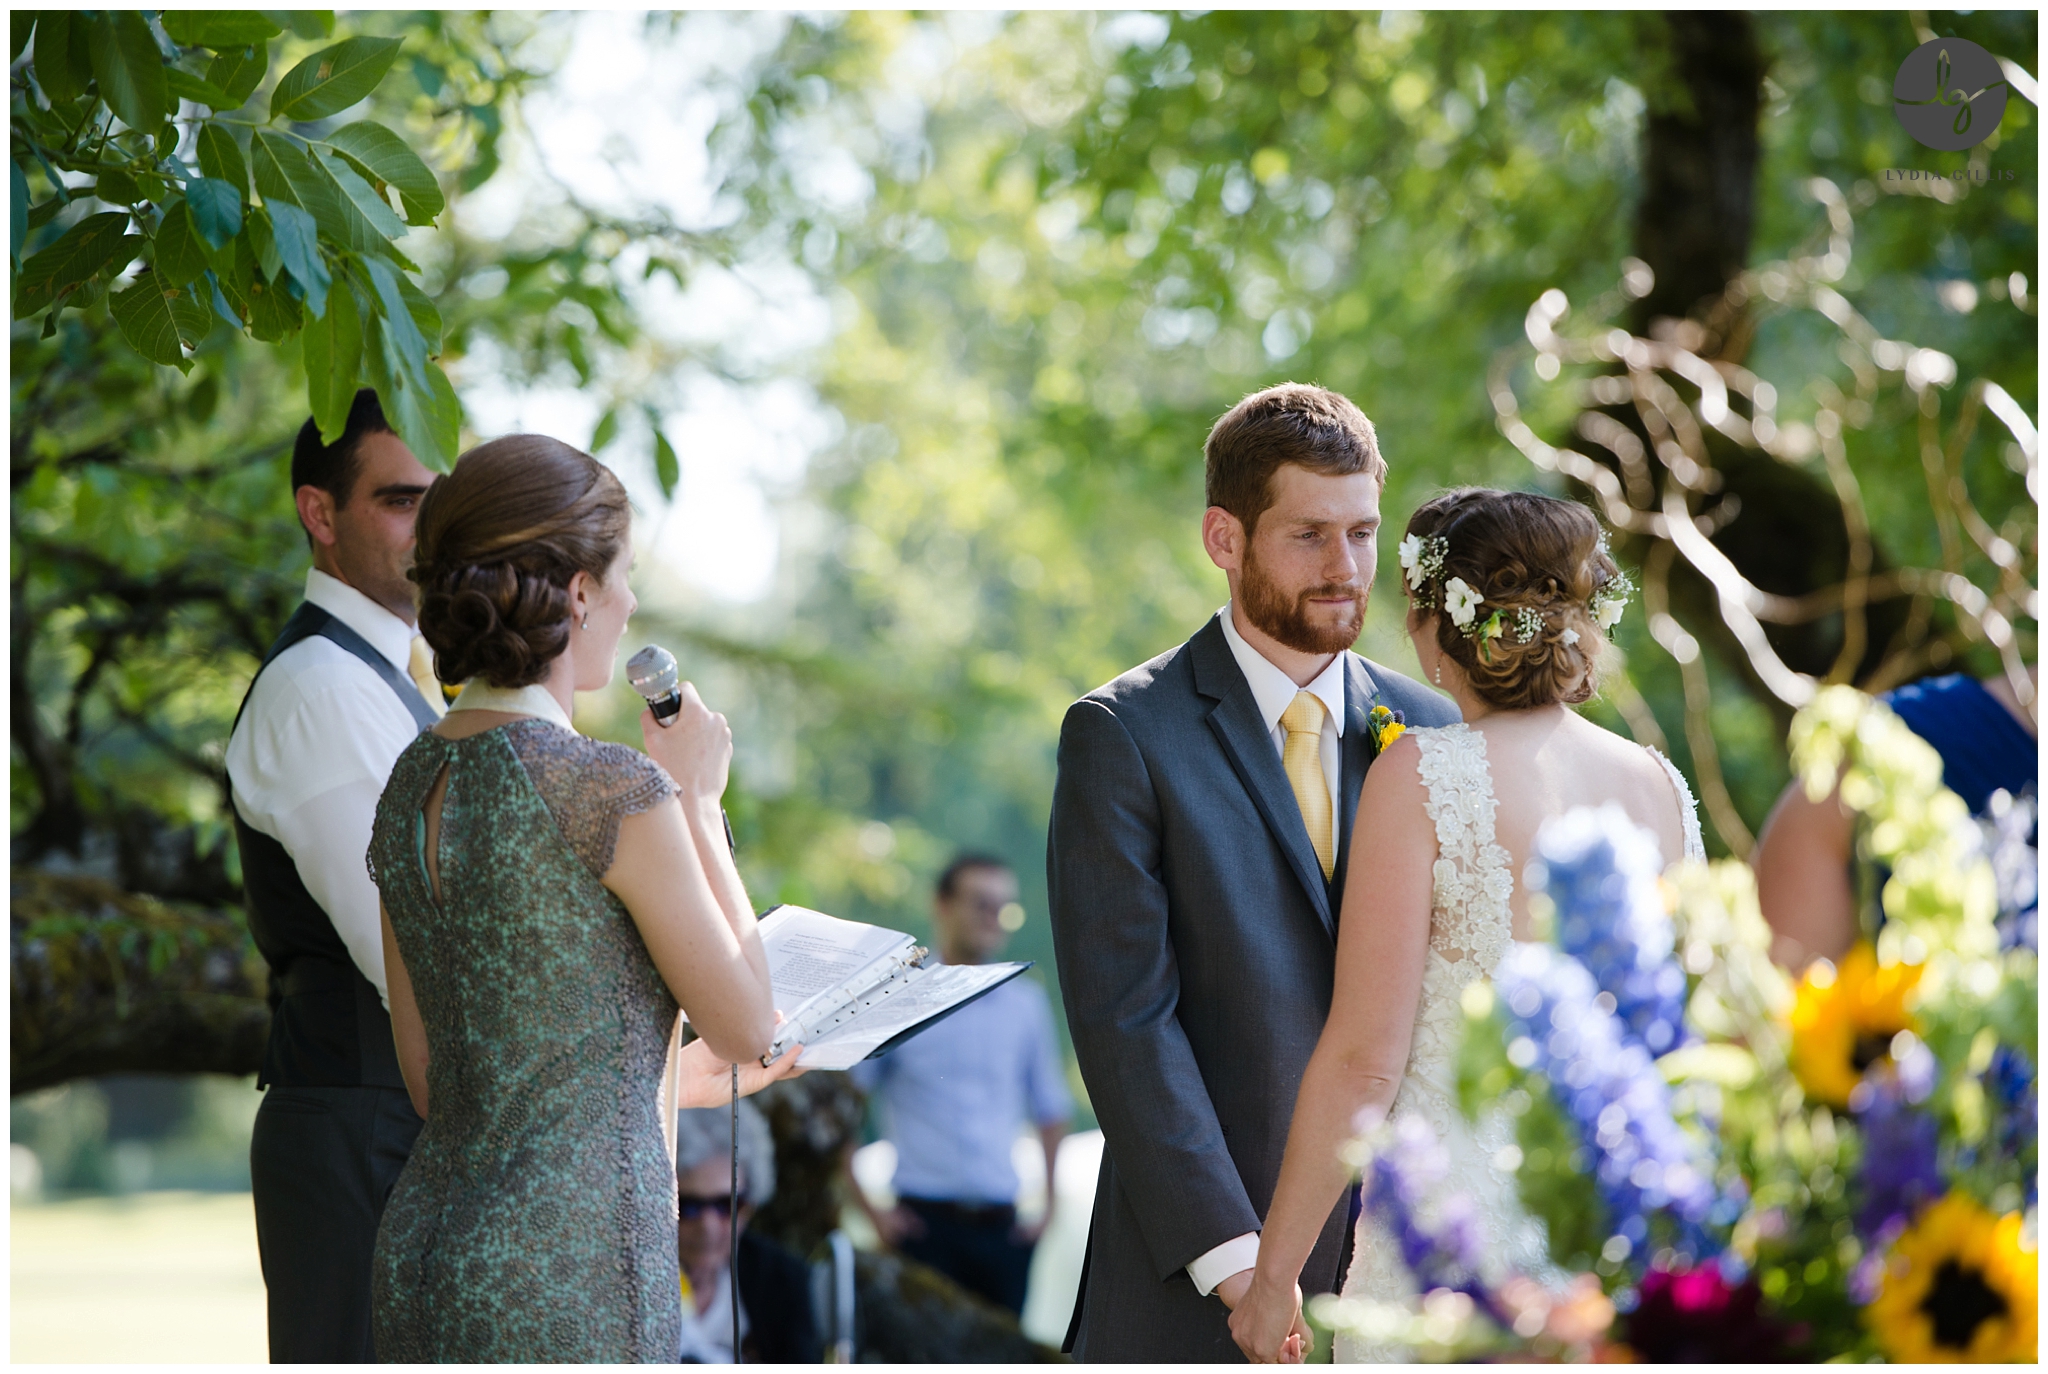 Outdoor wedding ceremony photo | Lydia Gillis Photography 